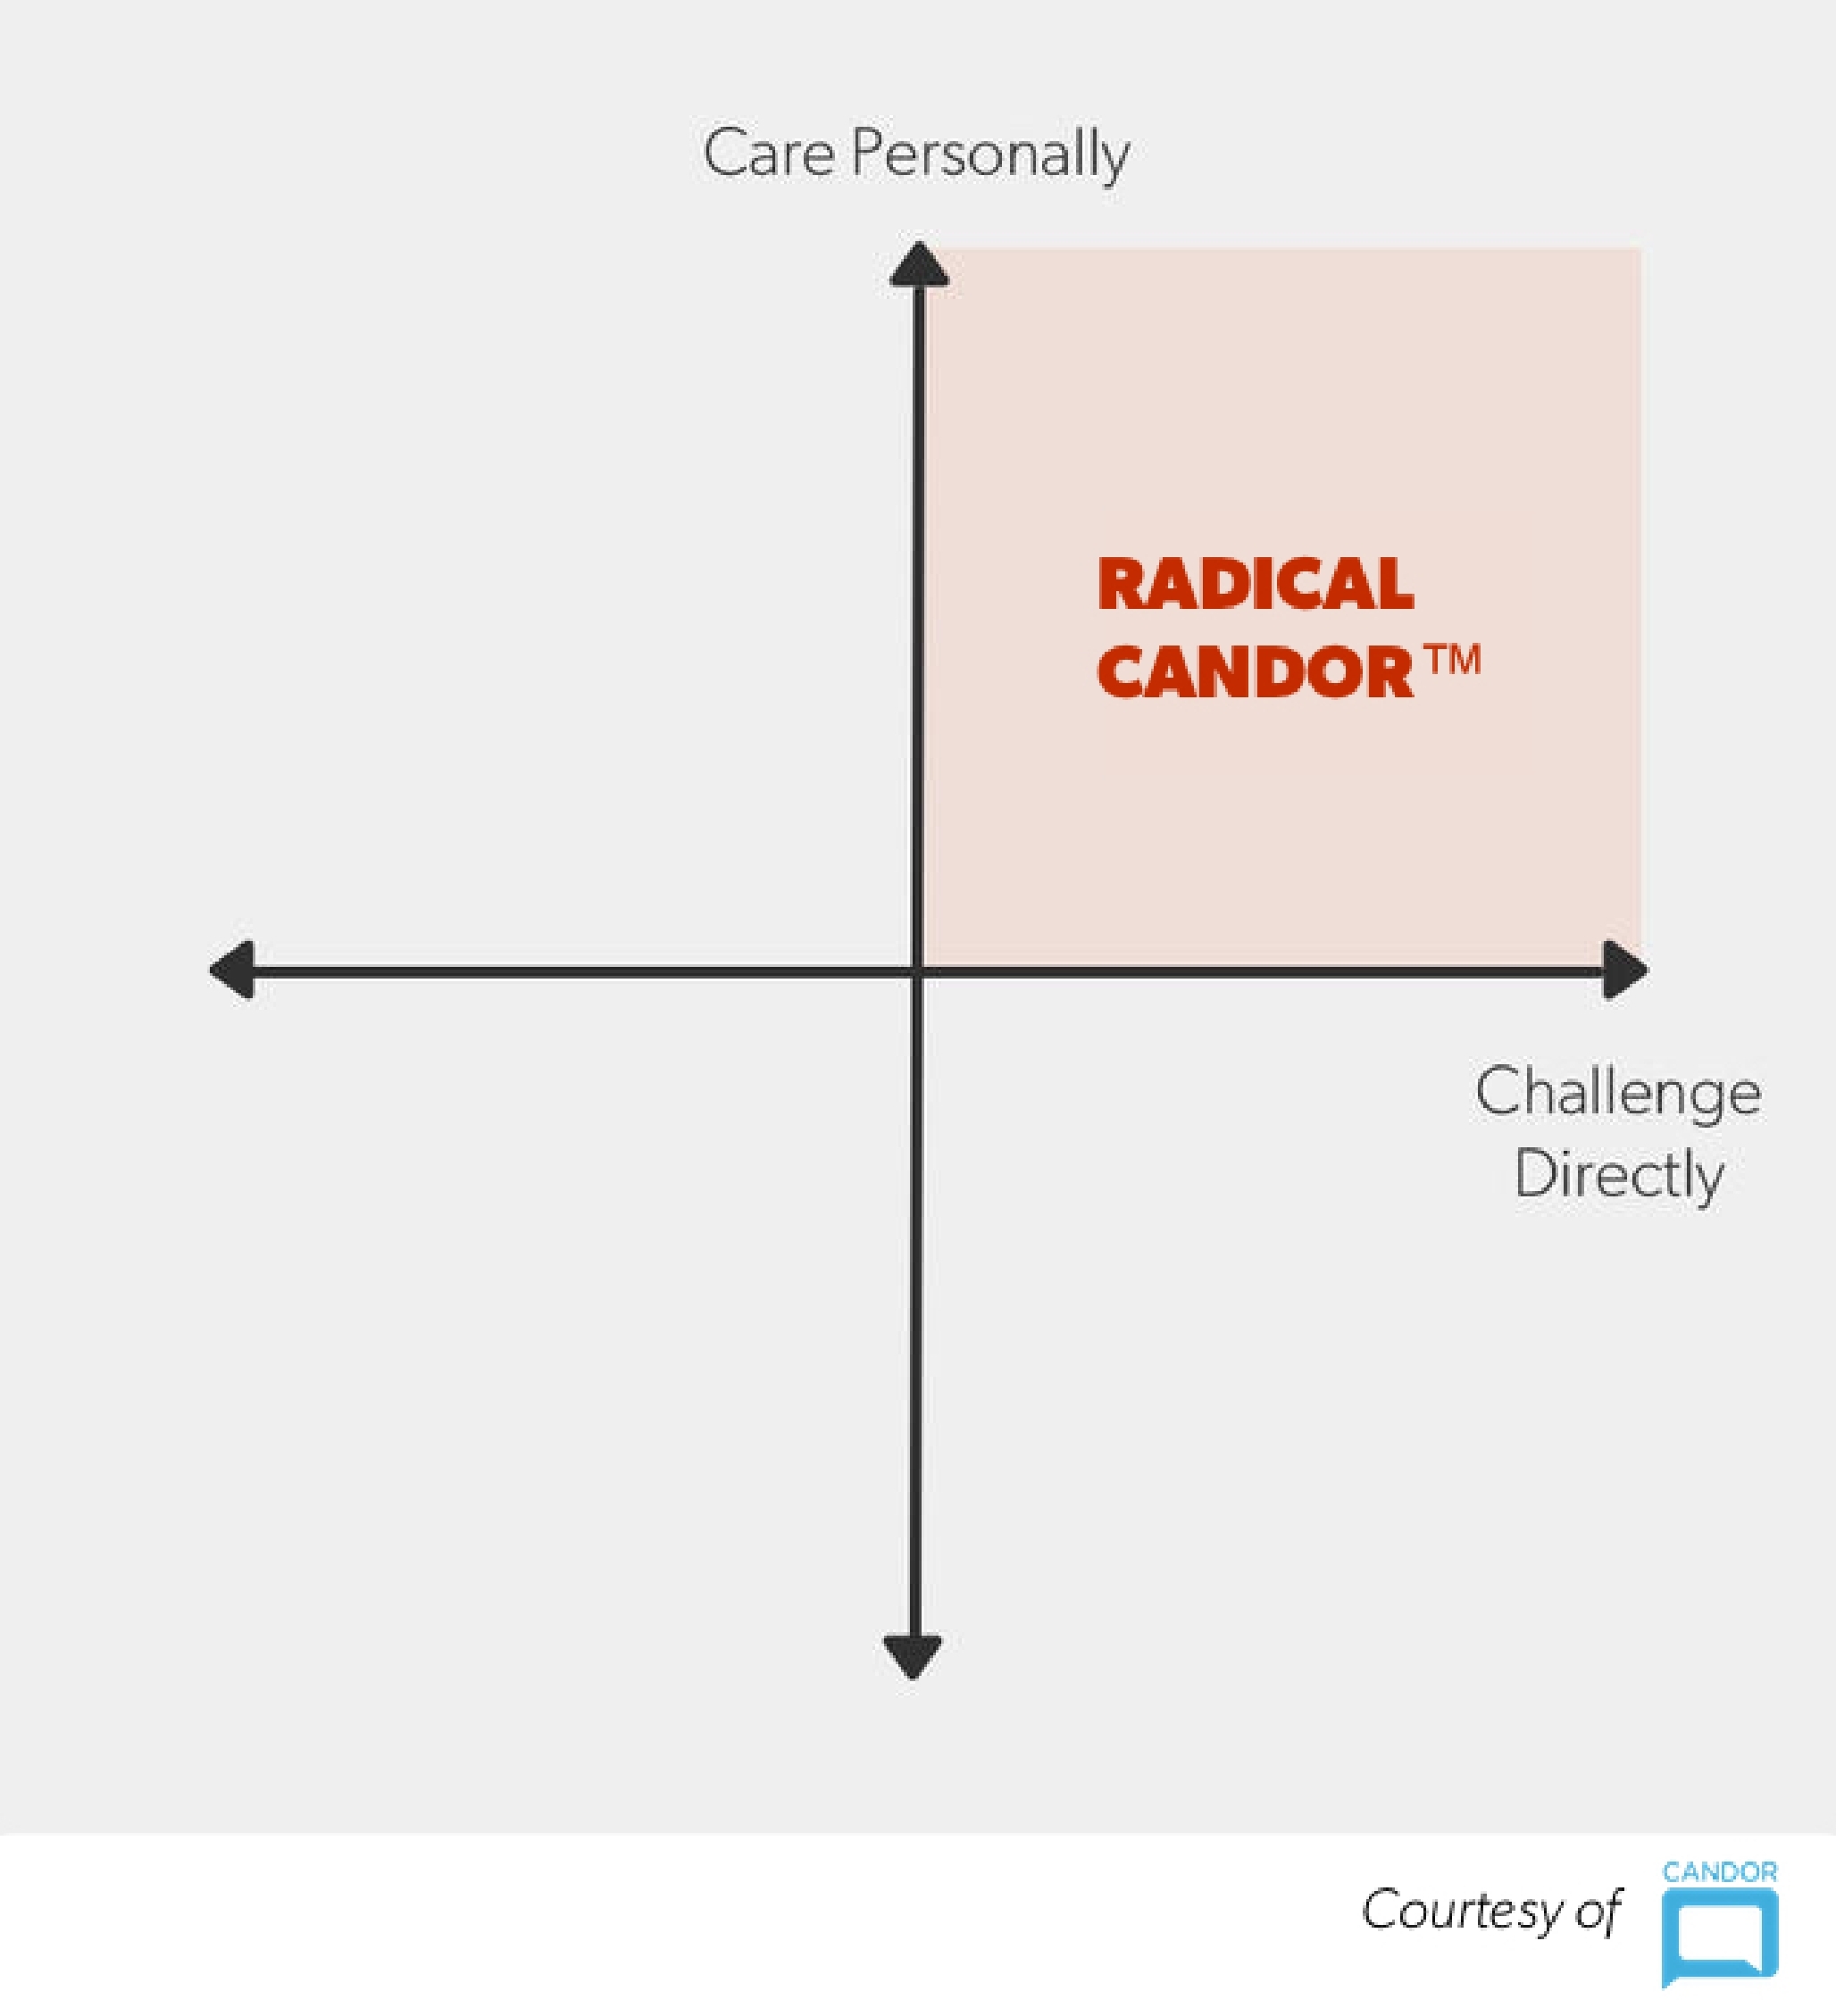 Customer Centric Culture & Radical Candor Approach